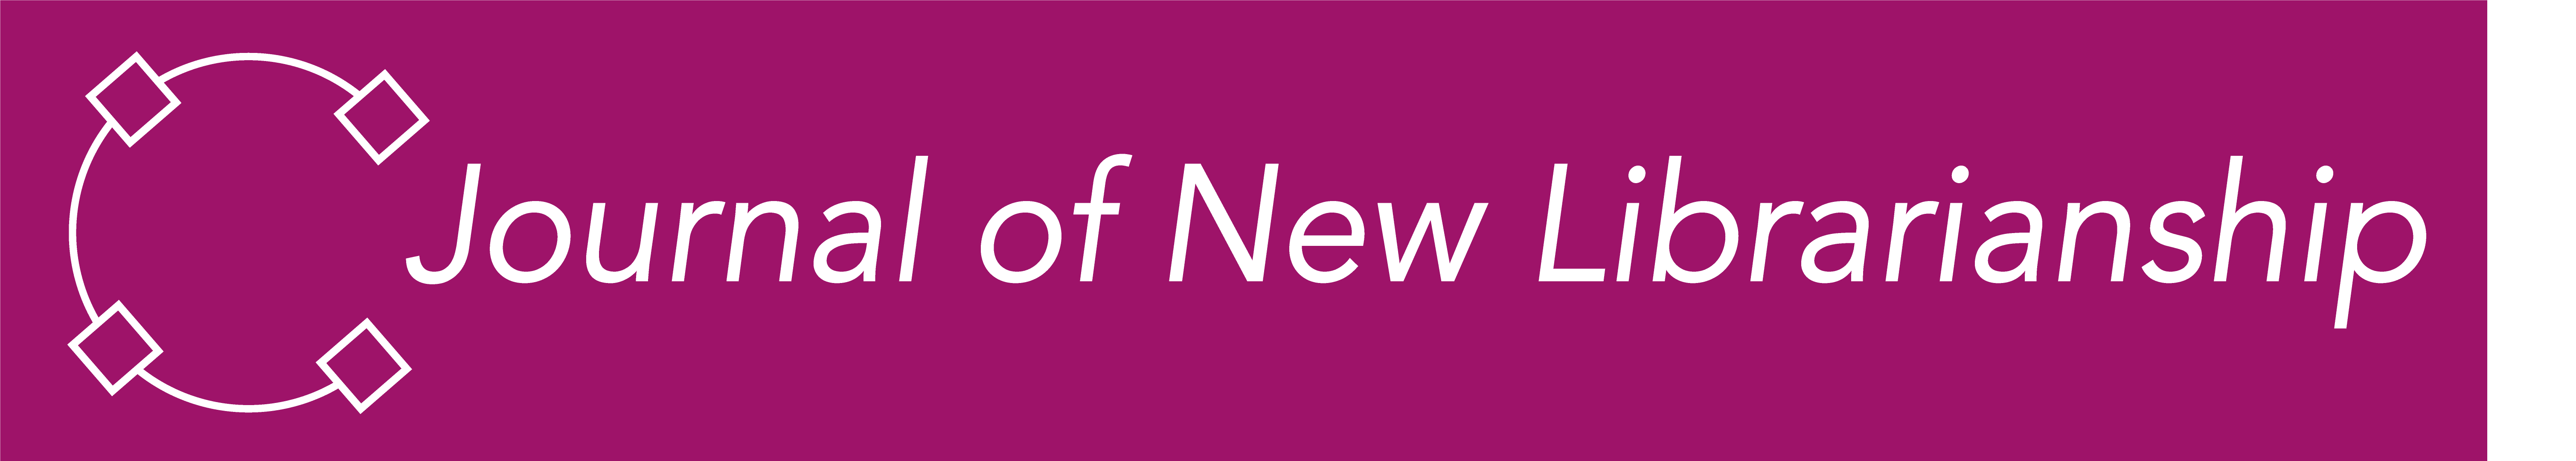 Journal of New Librarianship logo